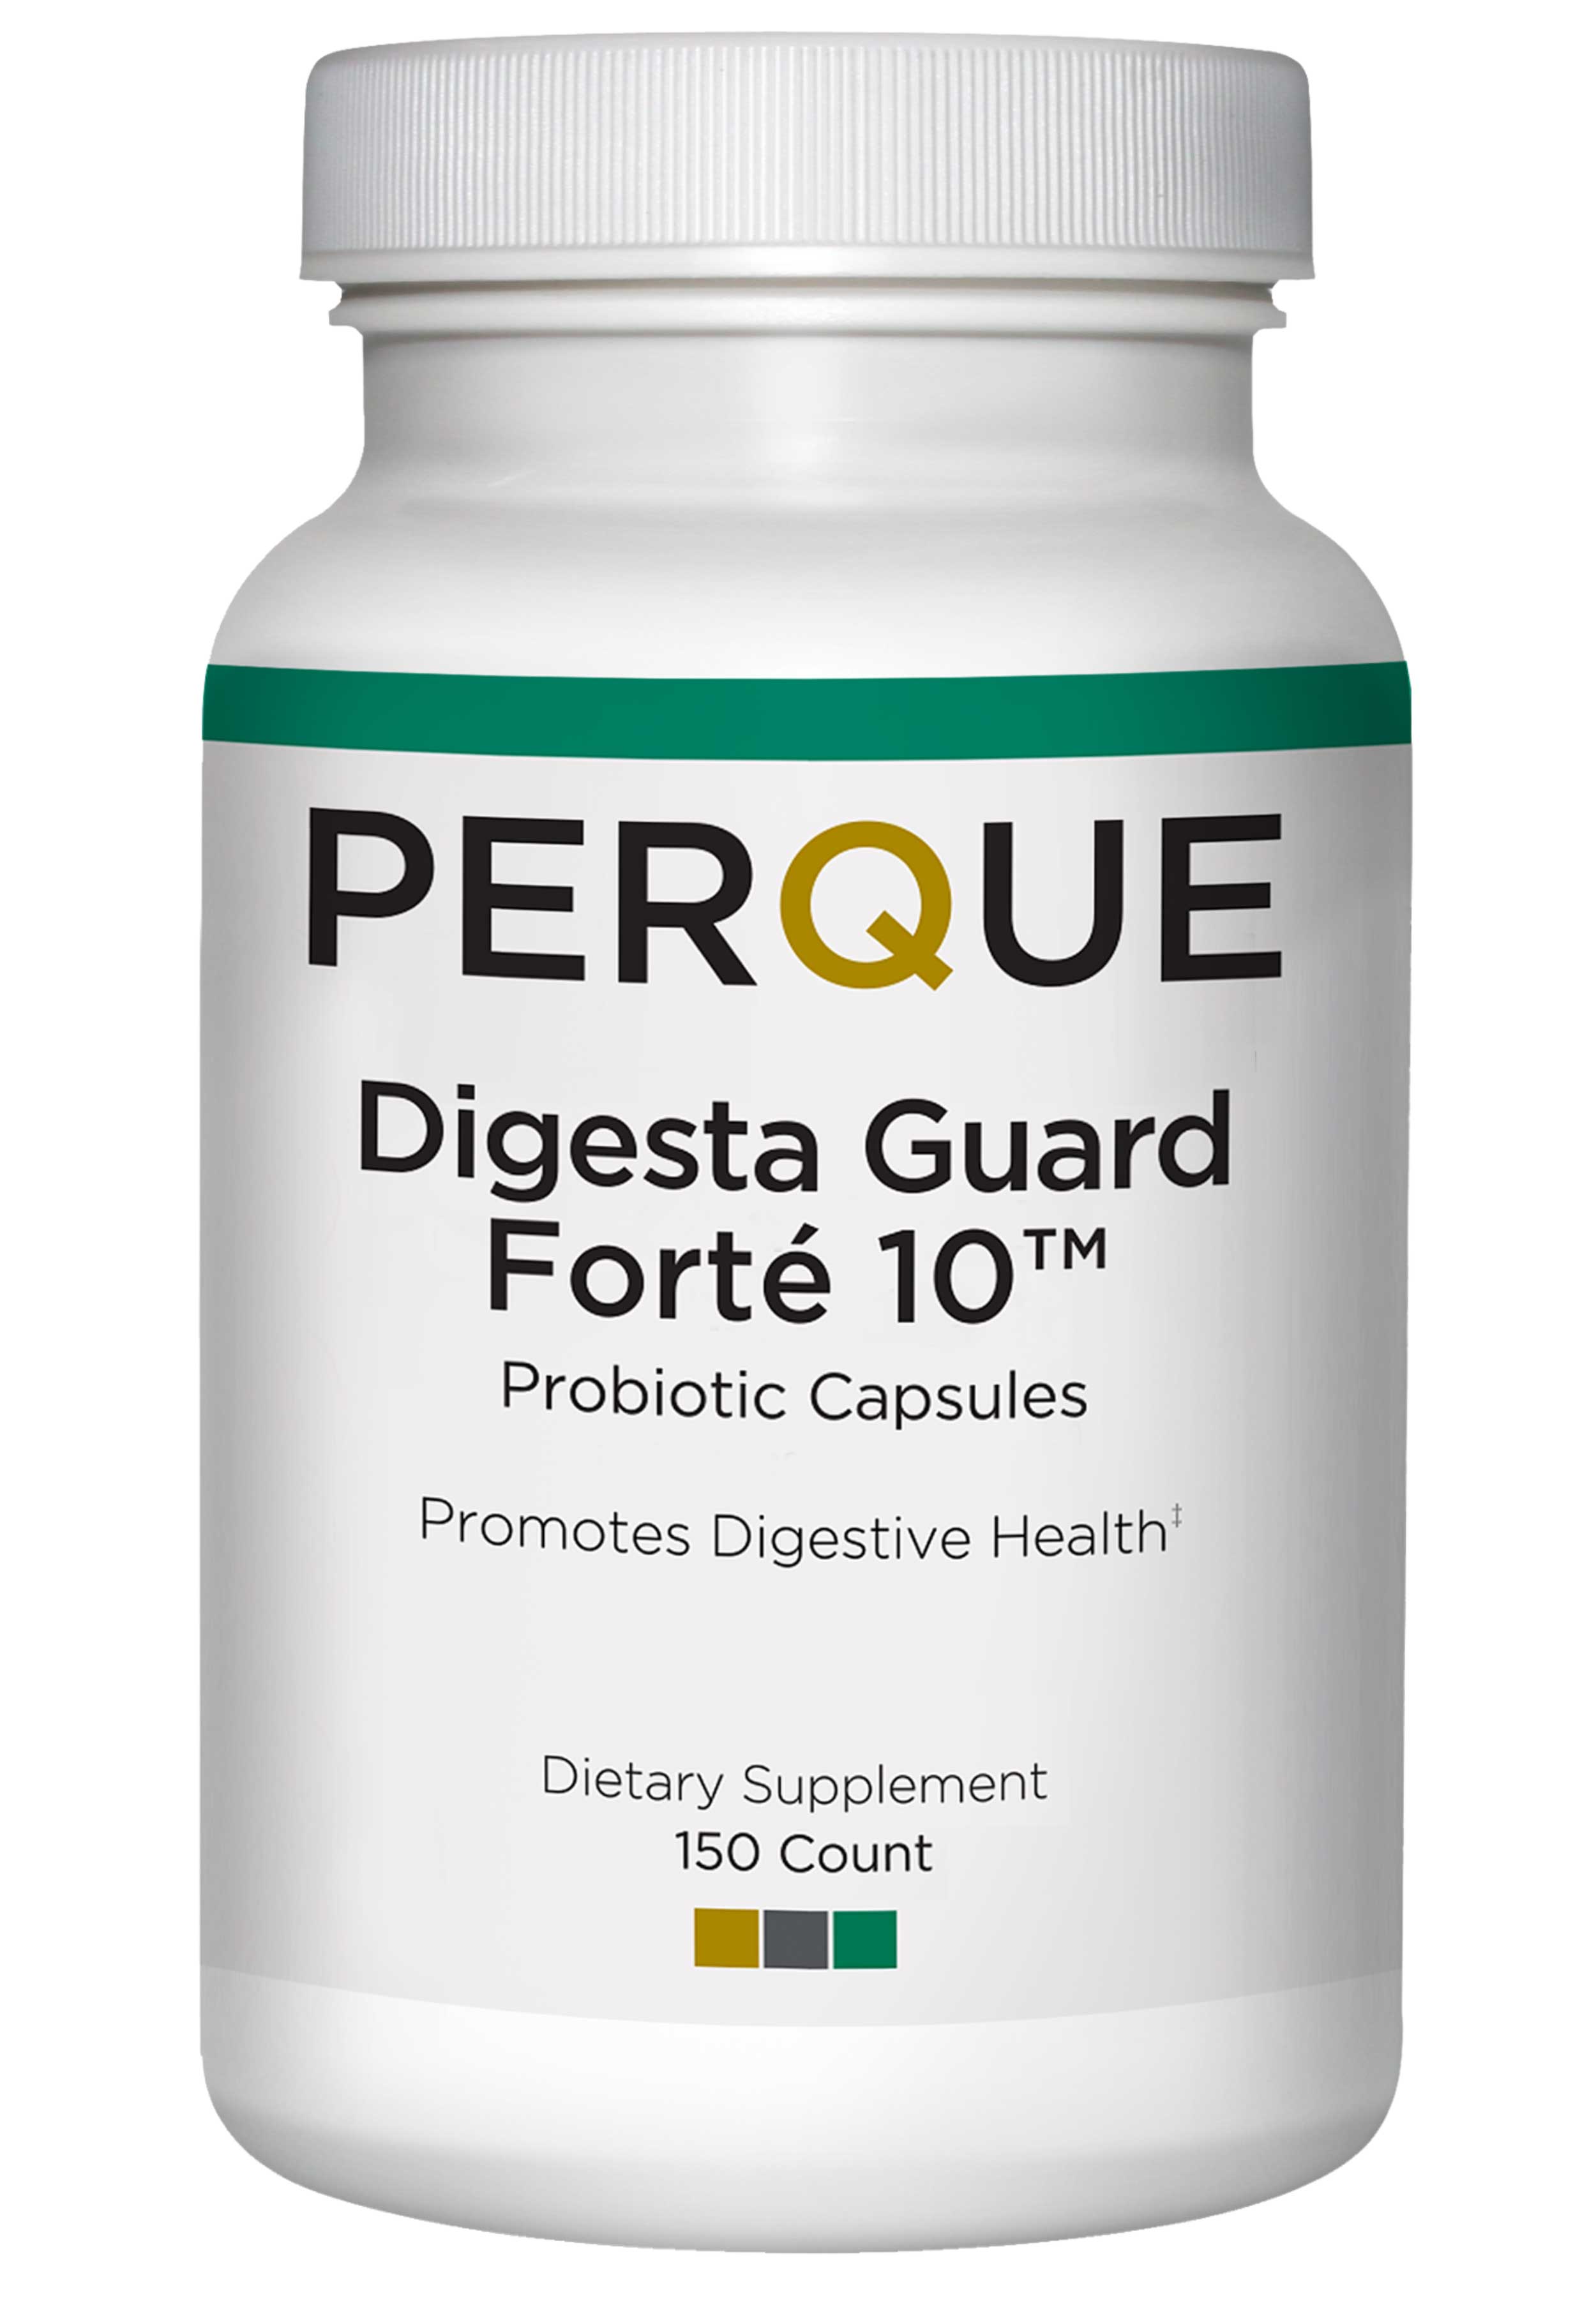 Perque Digesta Guard Forte 10